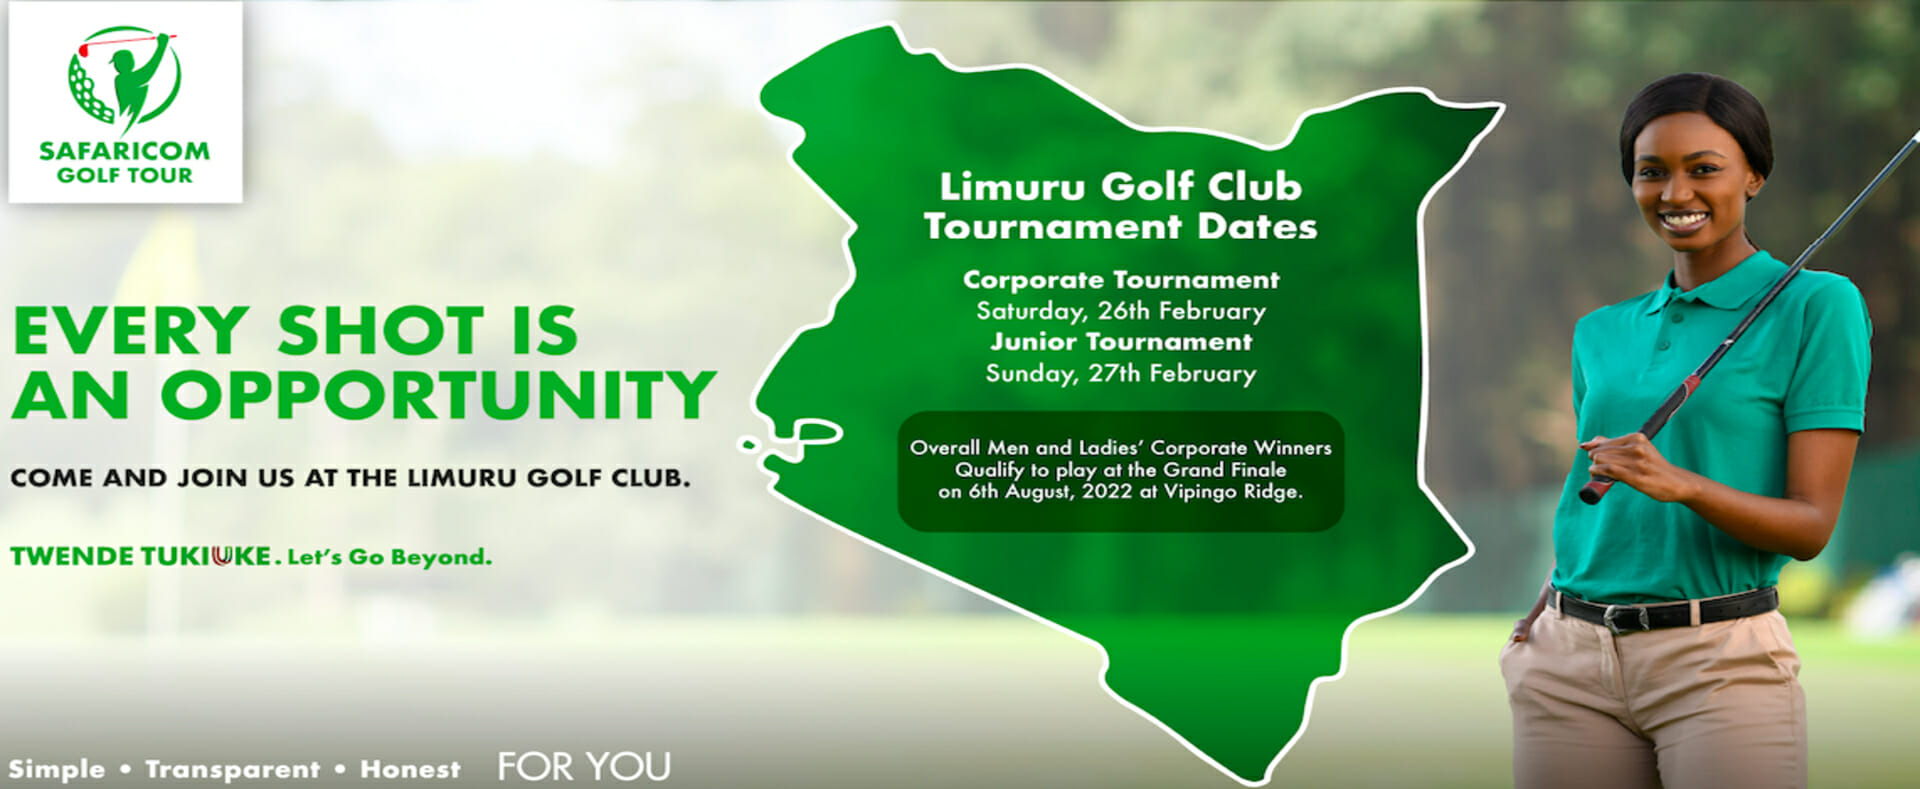 All Set for Second Leg of The Safaricom Golf Tour at Limuru Golf Club